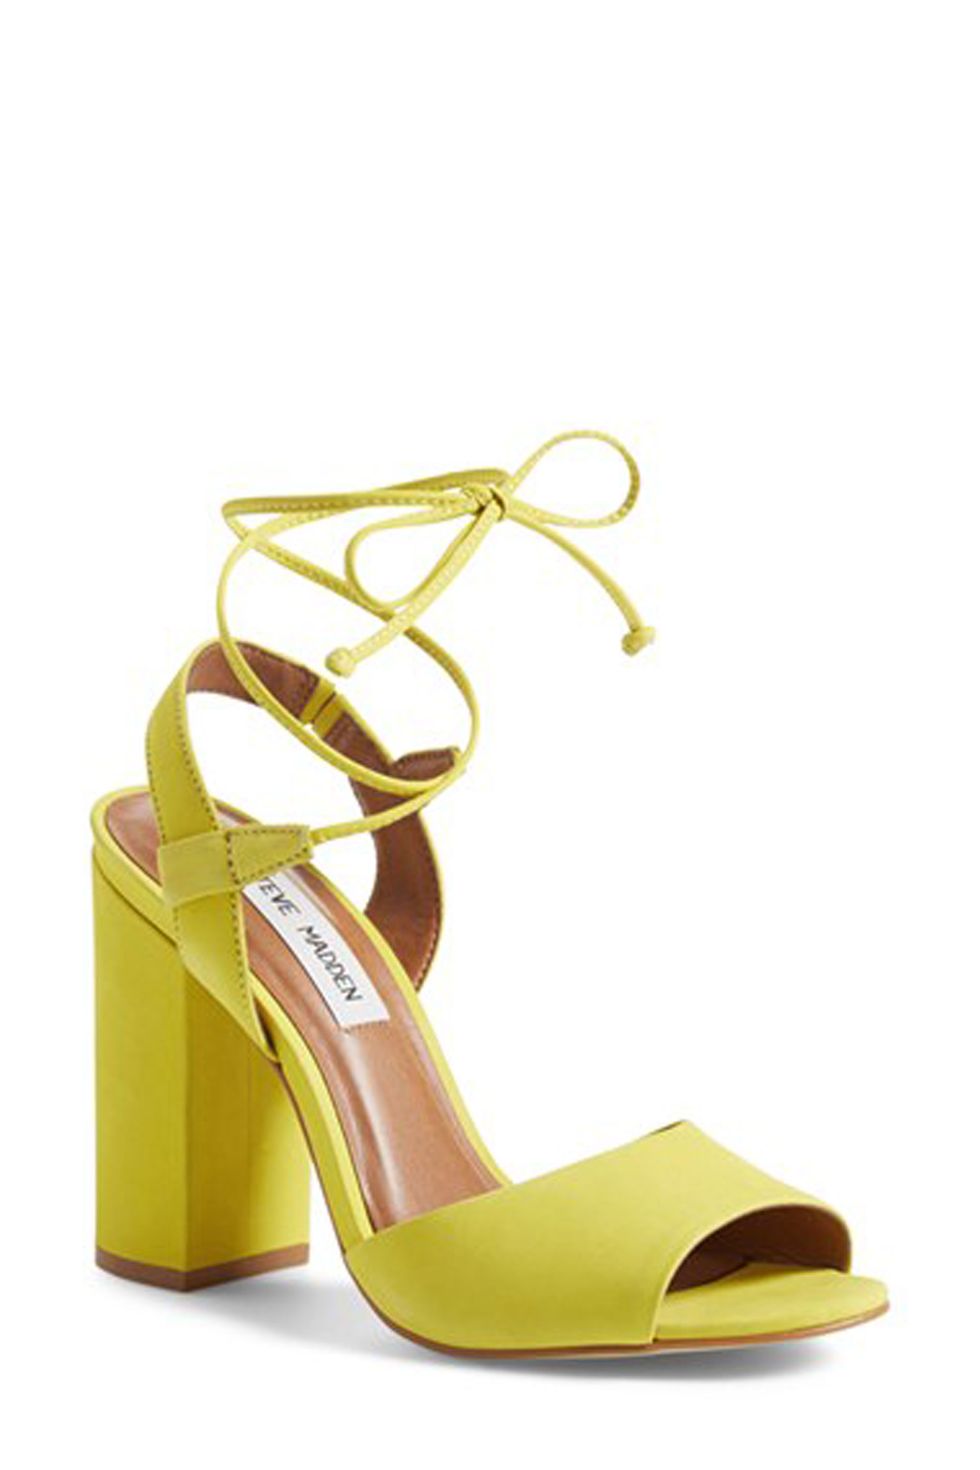 Footwear, High heels, Brown, Yellow, Sandal, Basic pump, Tan, Fashion, Beige, Material property, 